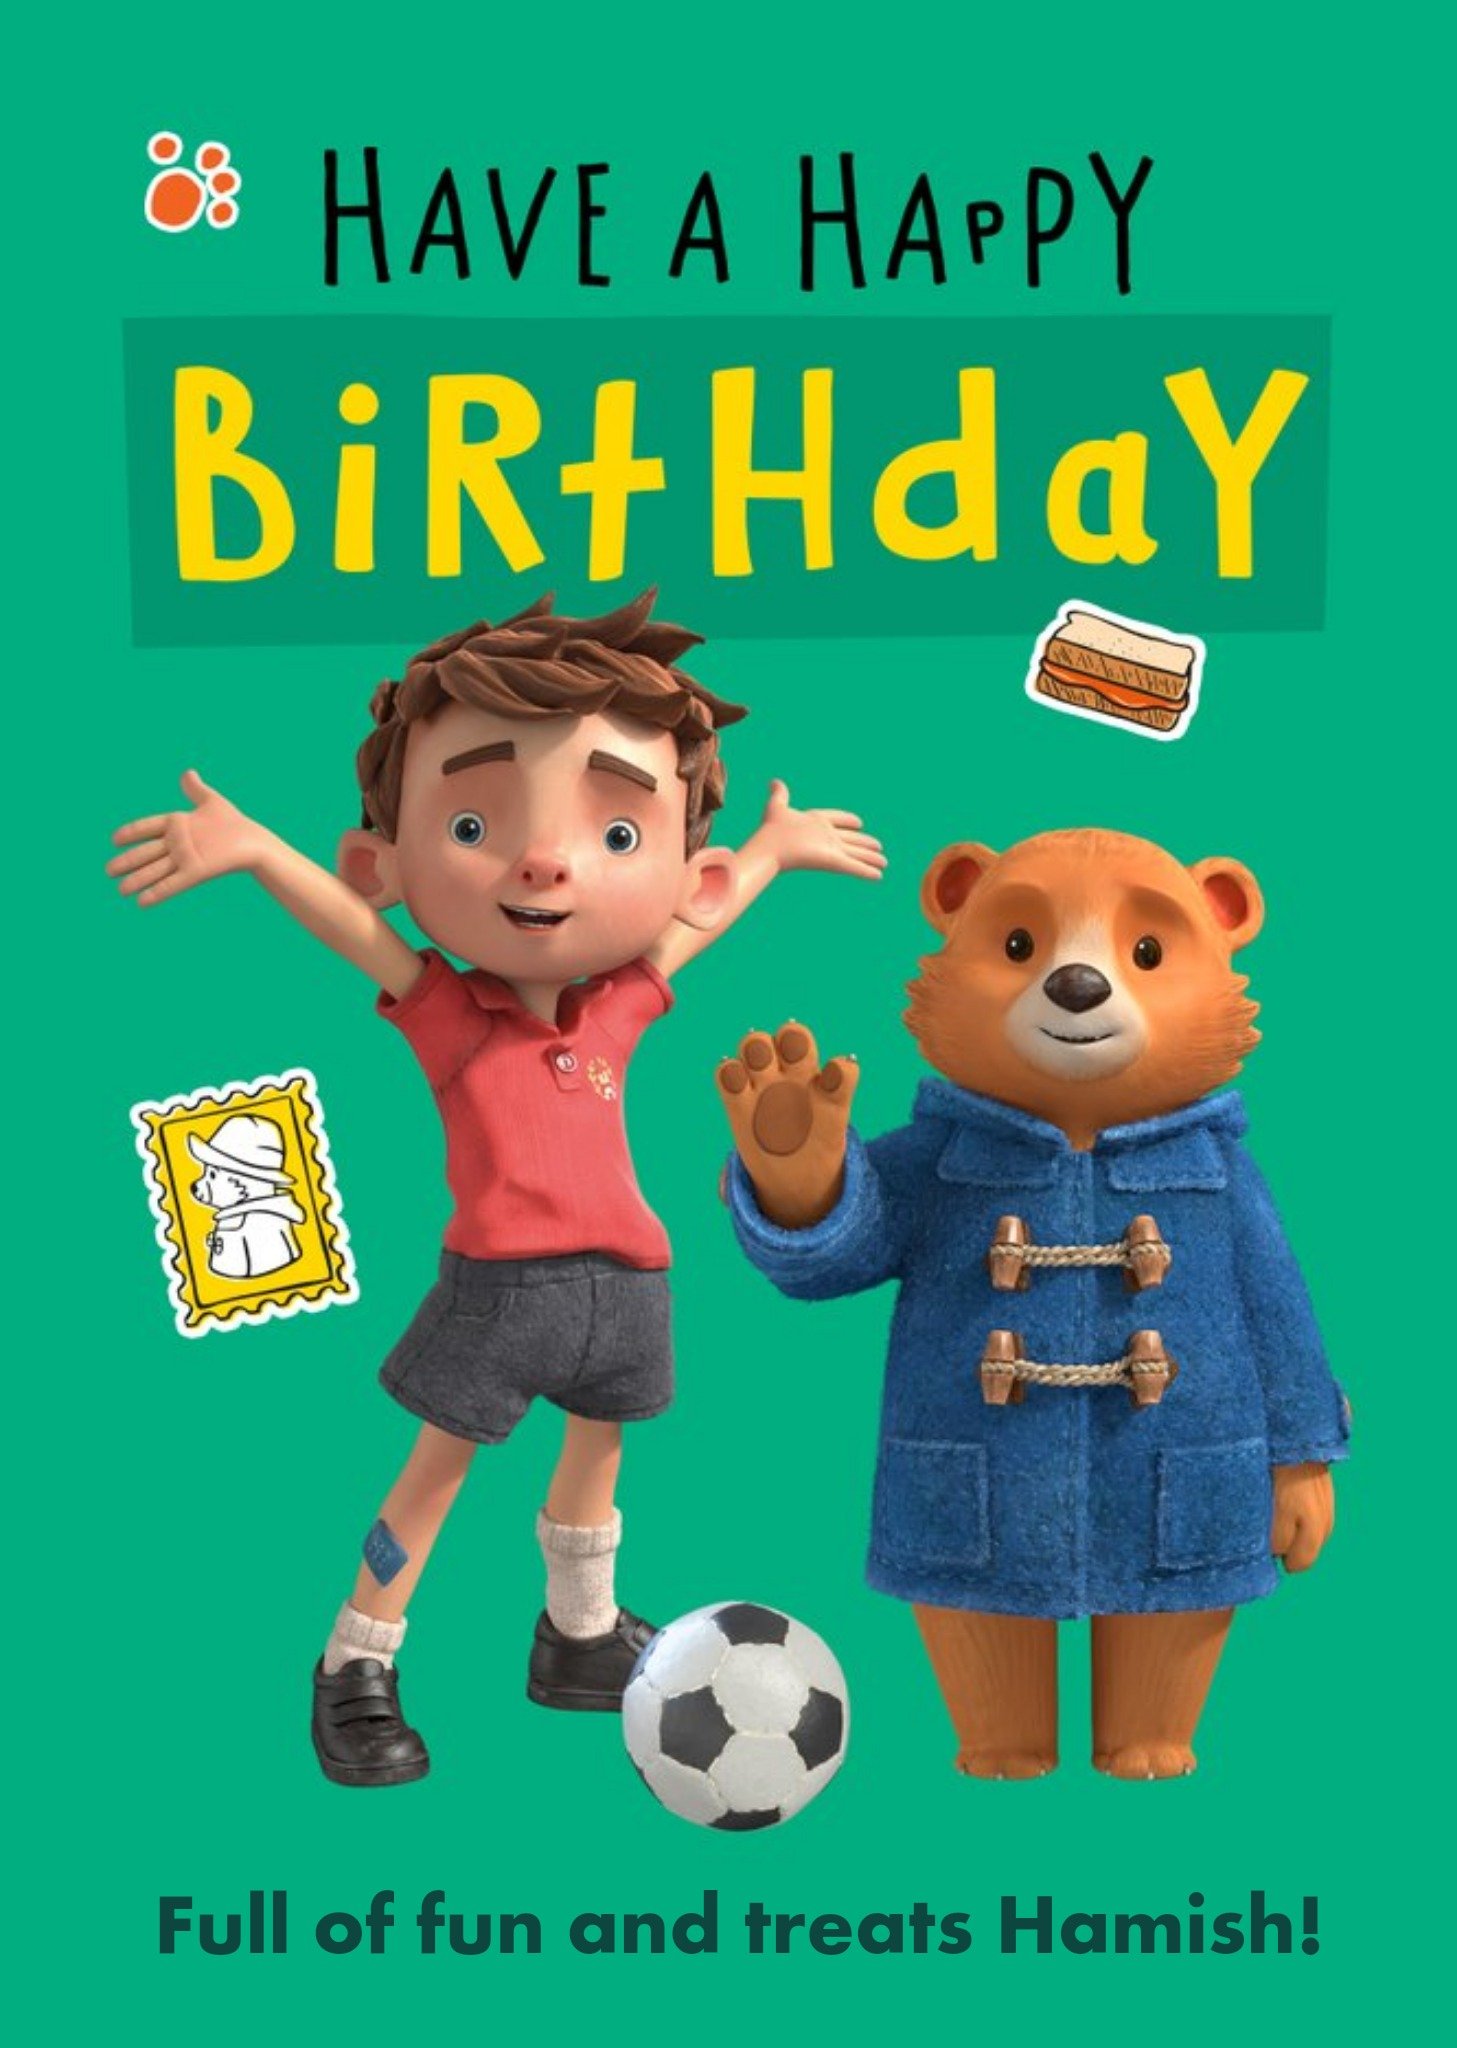 Paddington Bear Green Happy Birthday Card, Large